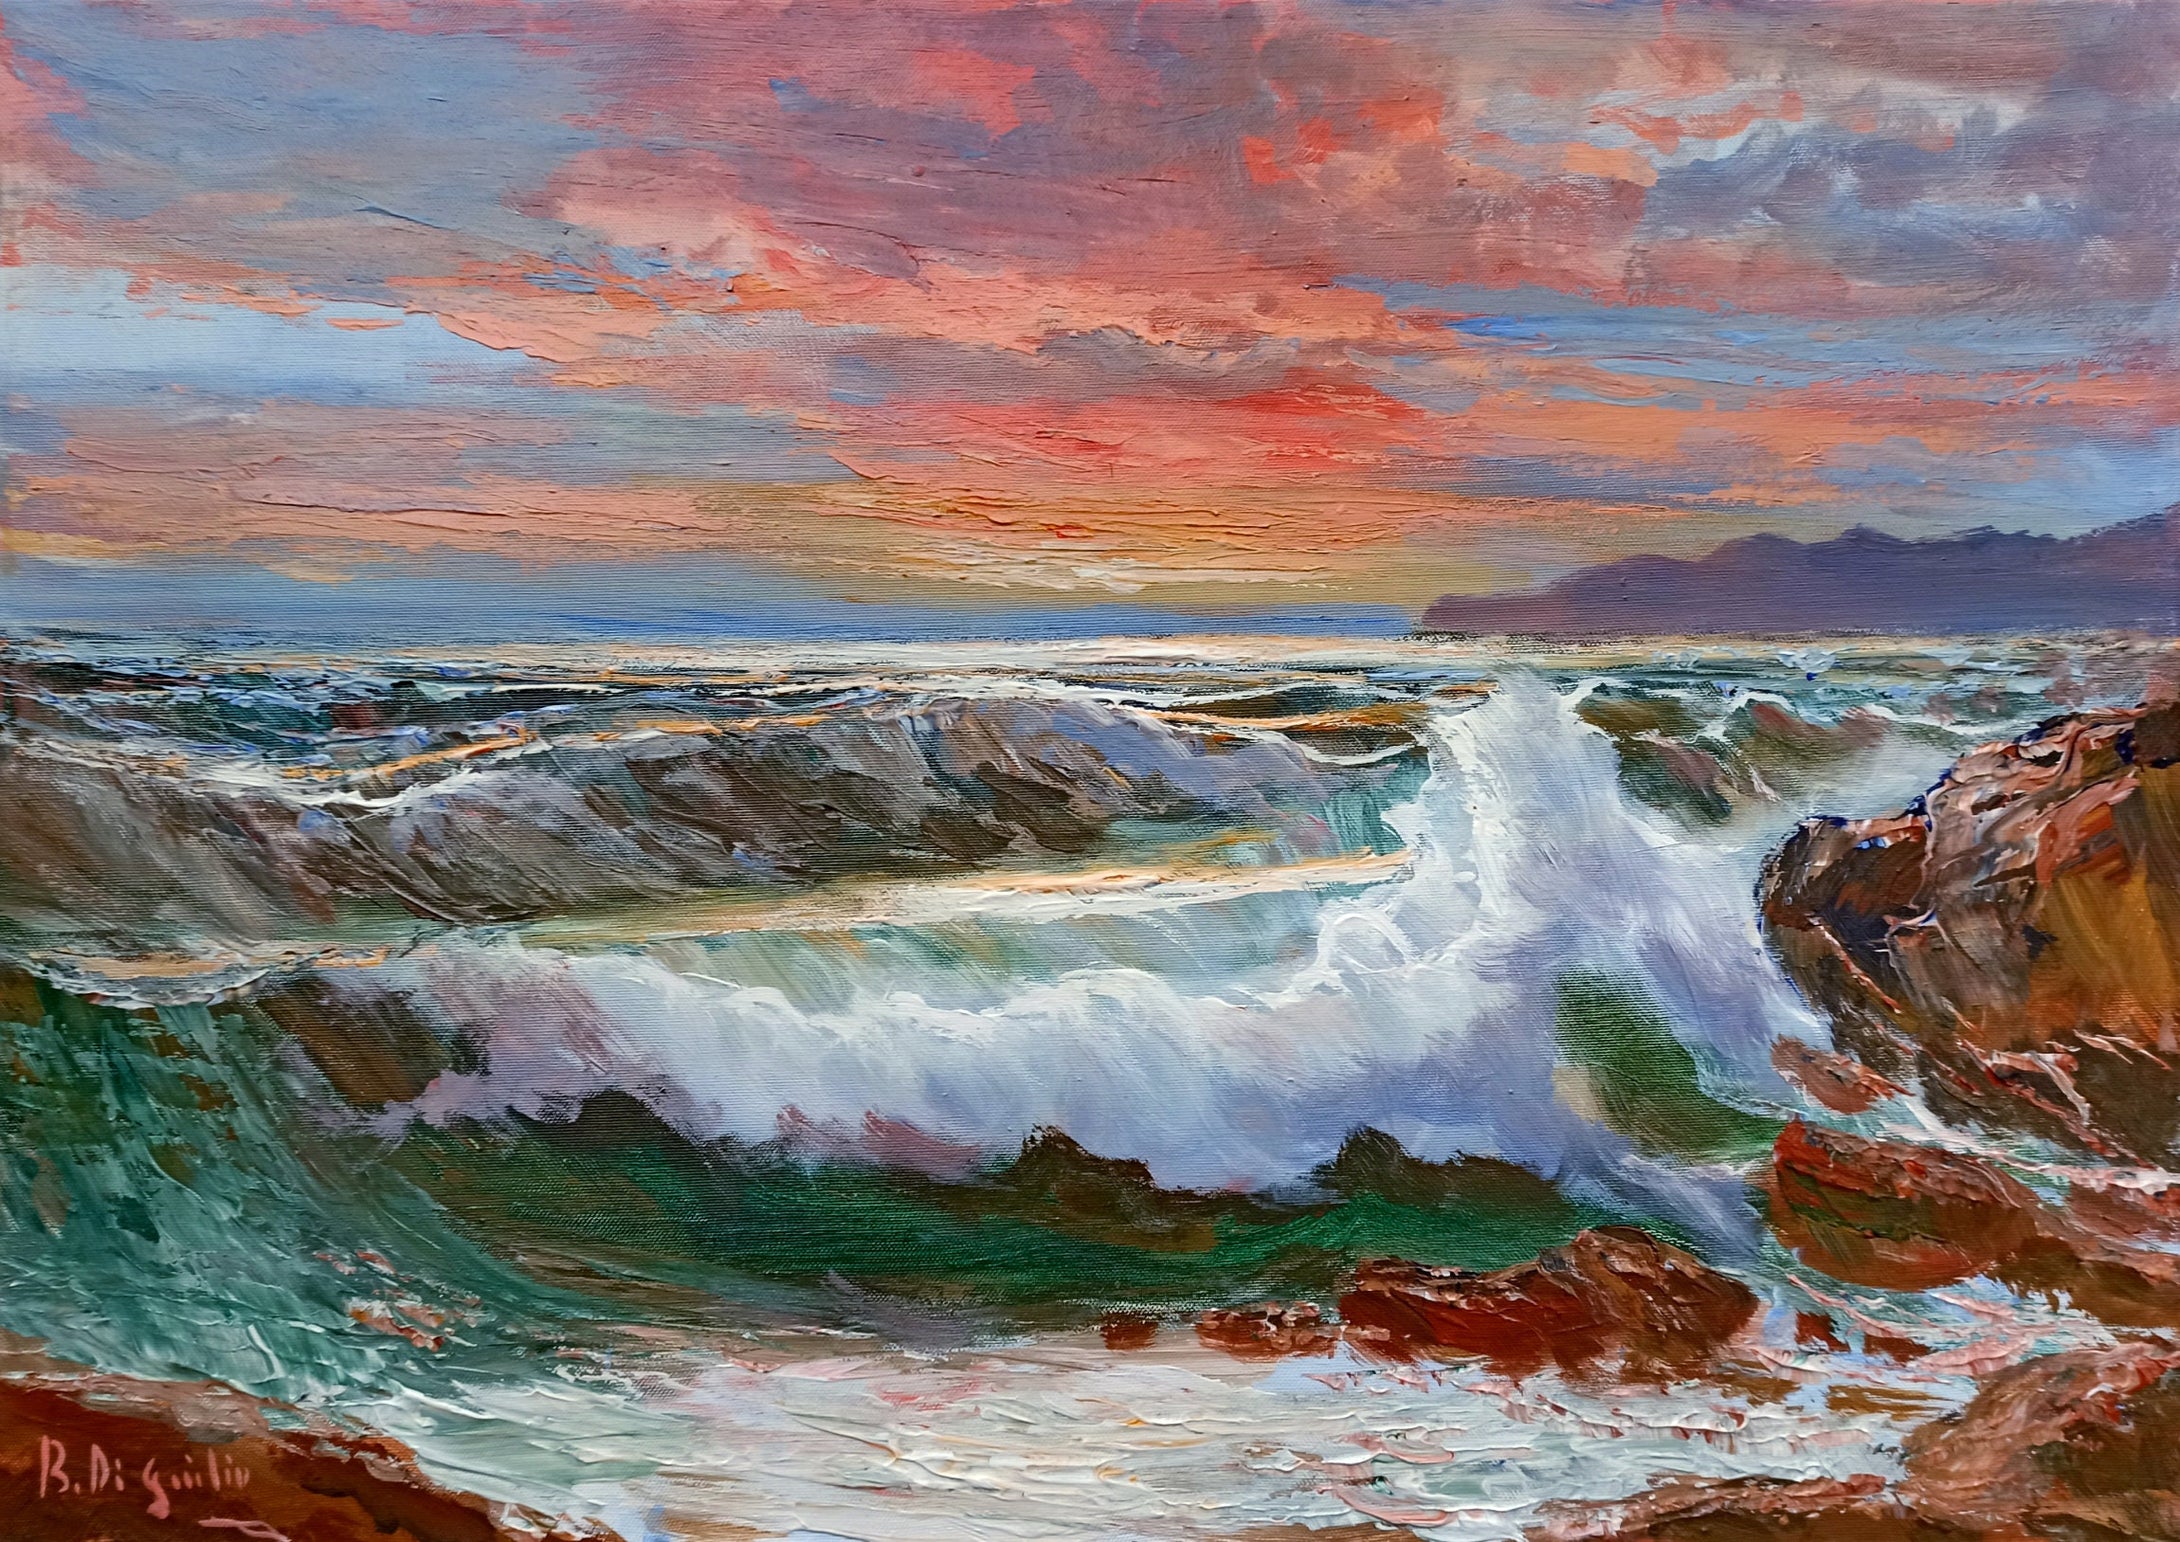 Sea swell painting n*2 series 